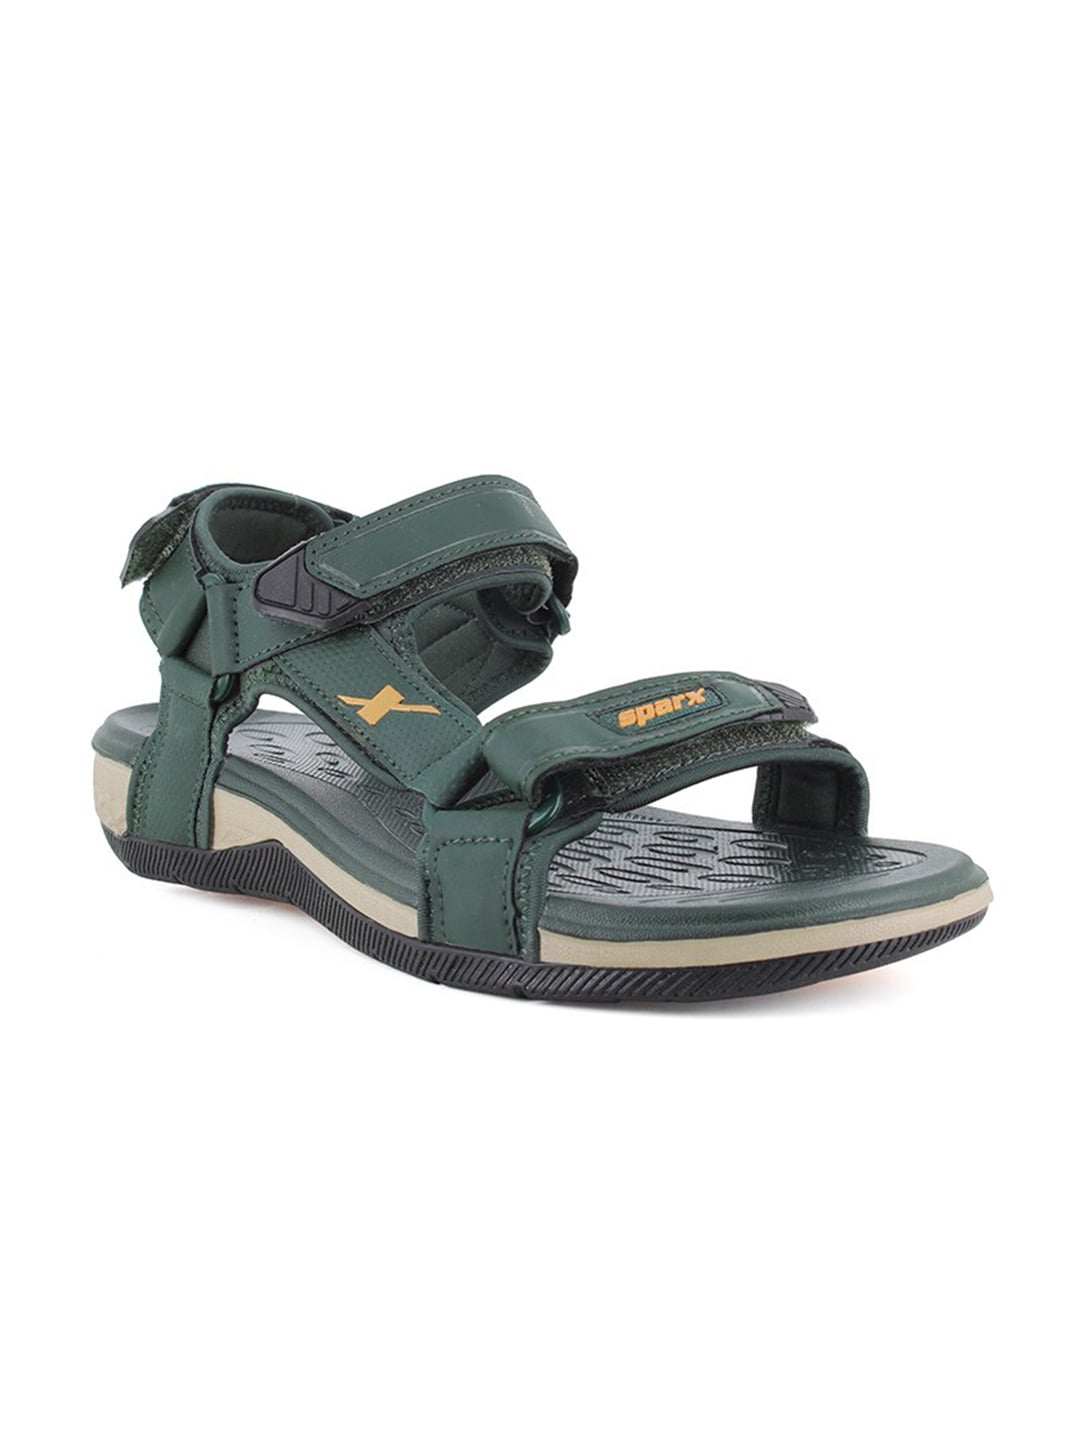 Sparx Mens SS-573 Sport Sandals